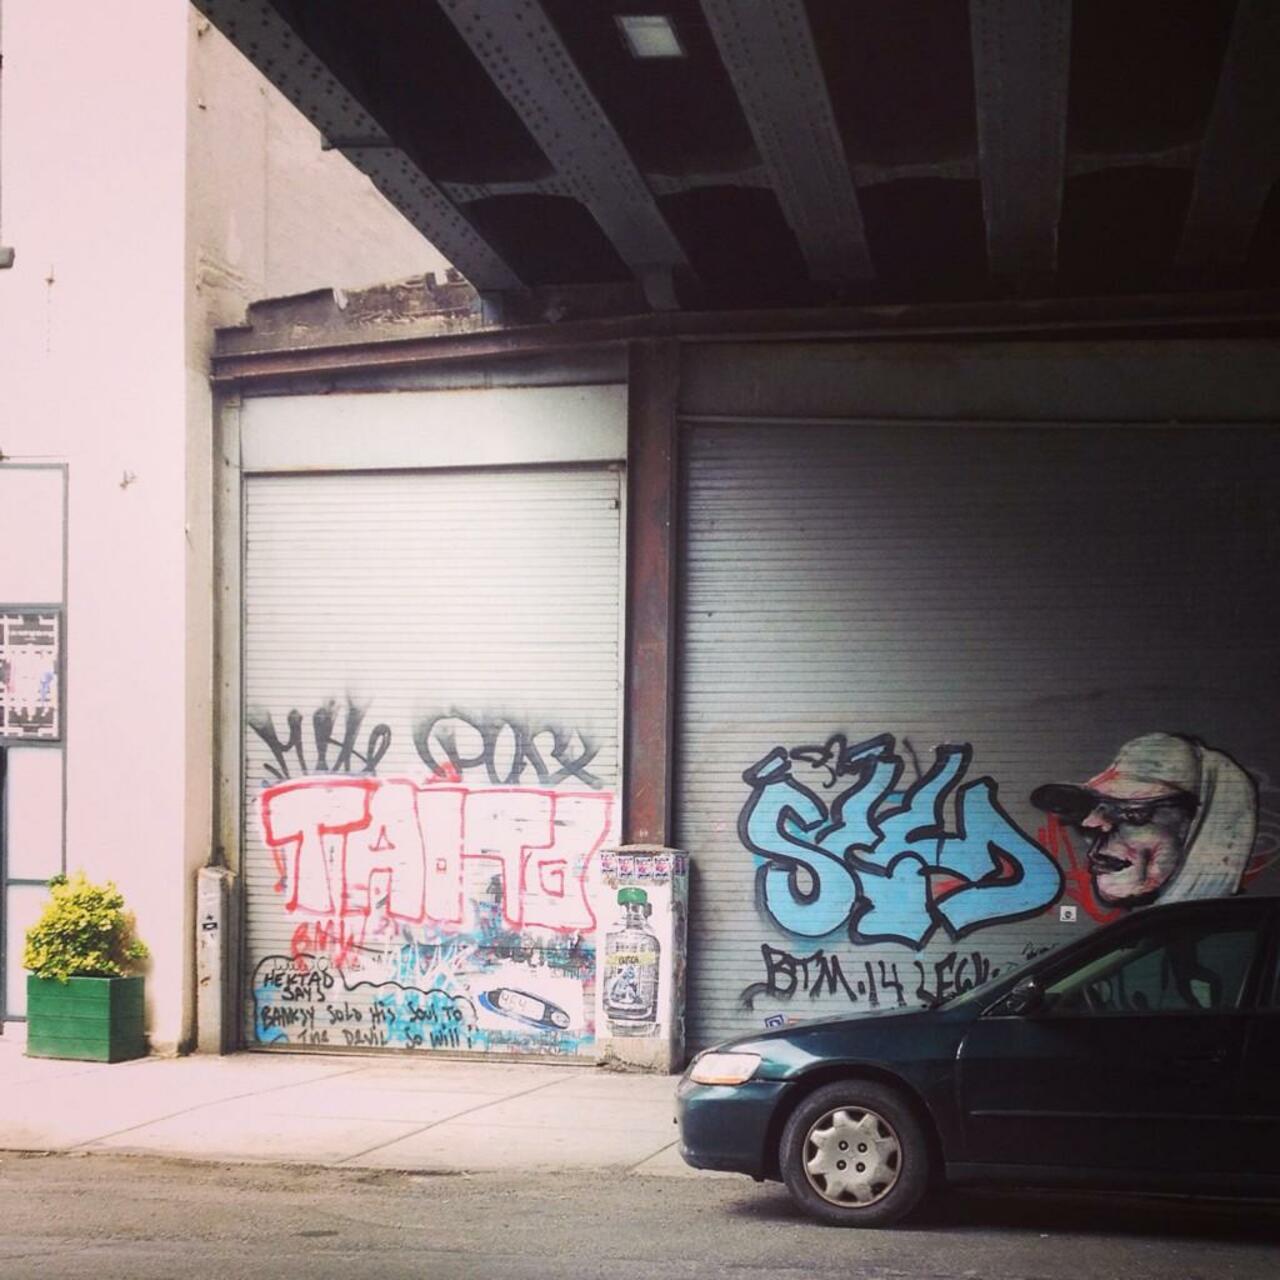 New York graffiti - Chelsea #iamsoojin #streetart #graffiti #newyork #chelsea #urbanculture #streetwear #art #fashion http://t.co/wmCY3qU1od